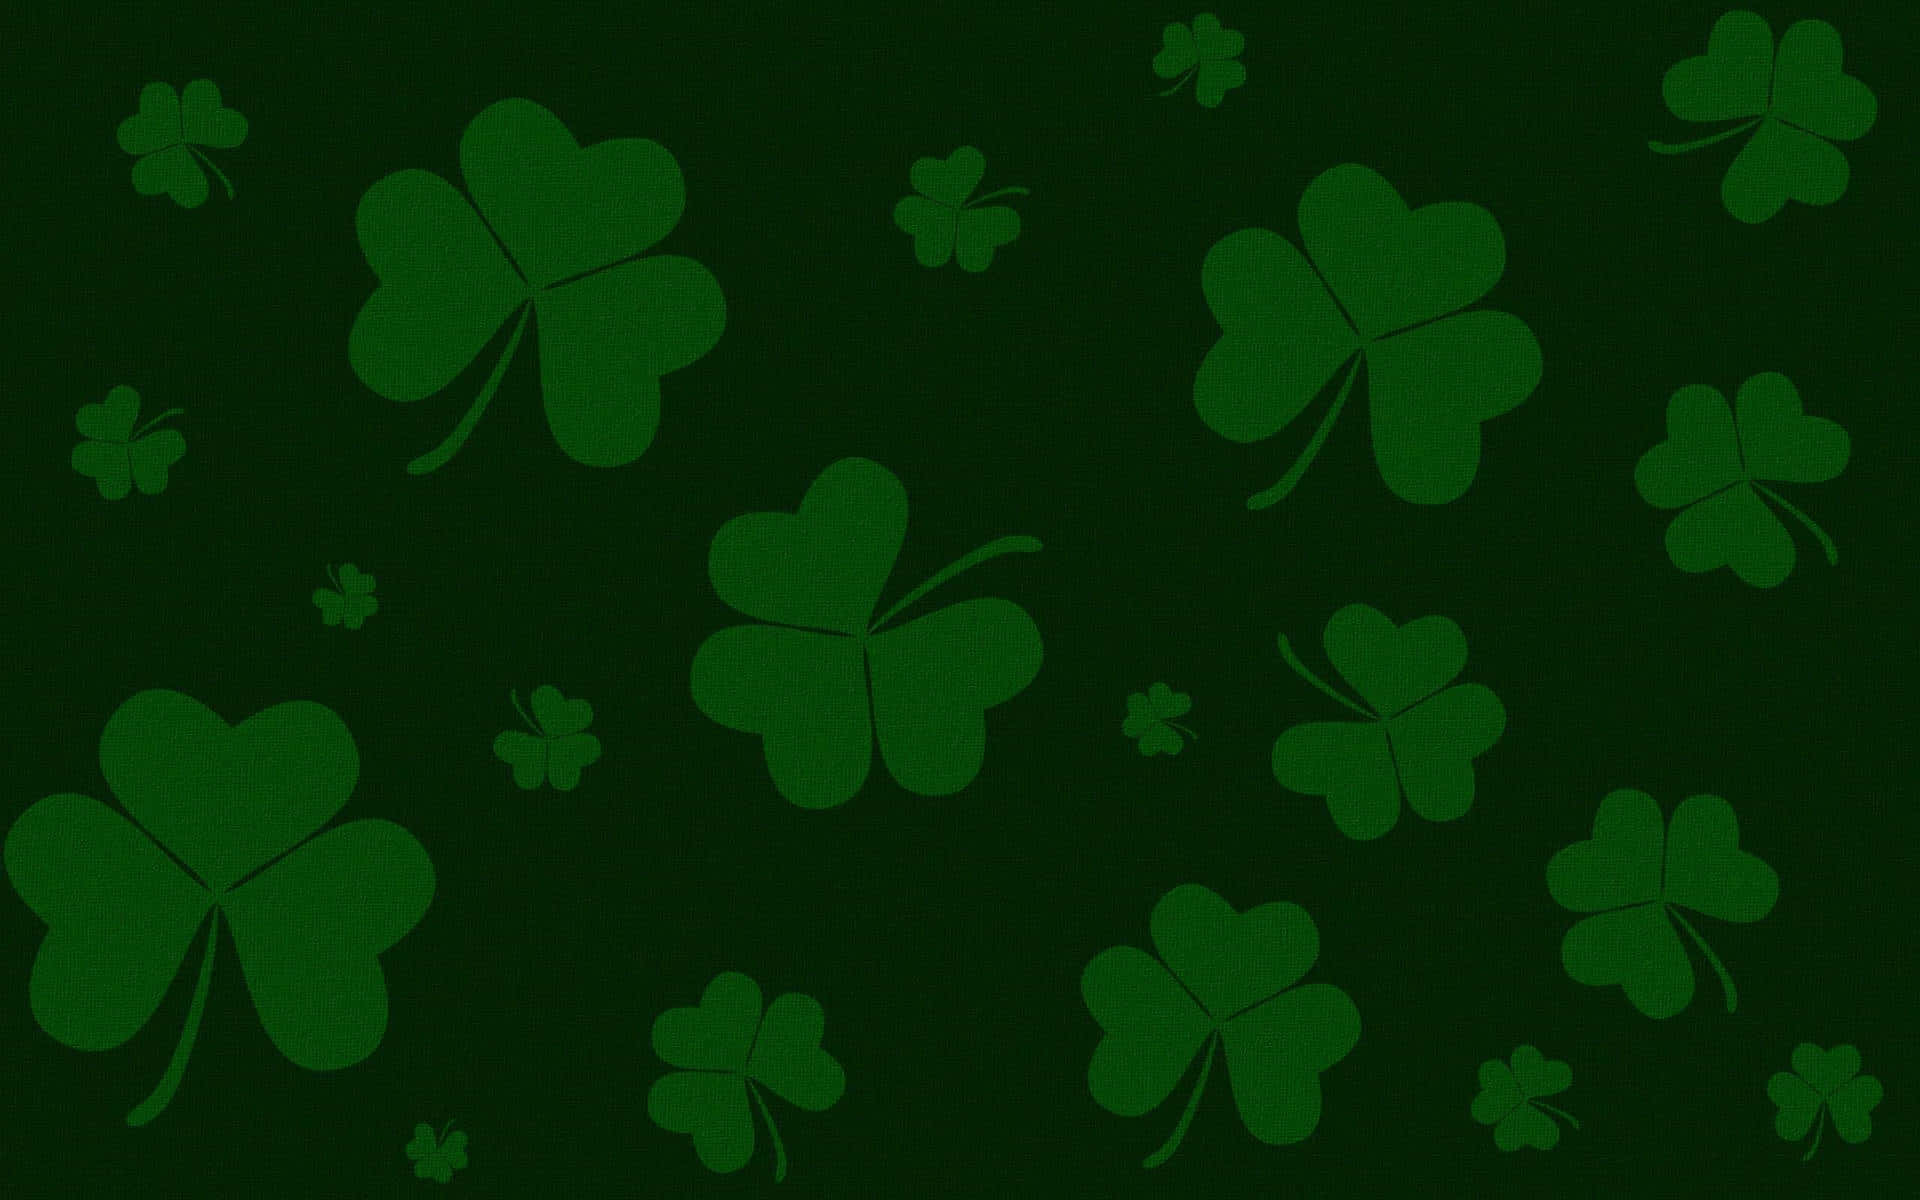 St Patricks Day Shamrock Pattern.jpg Wallpaper